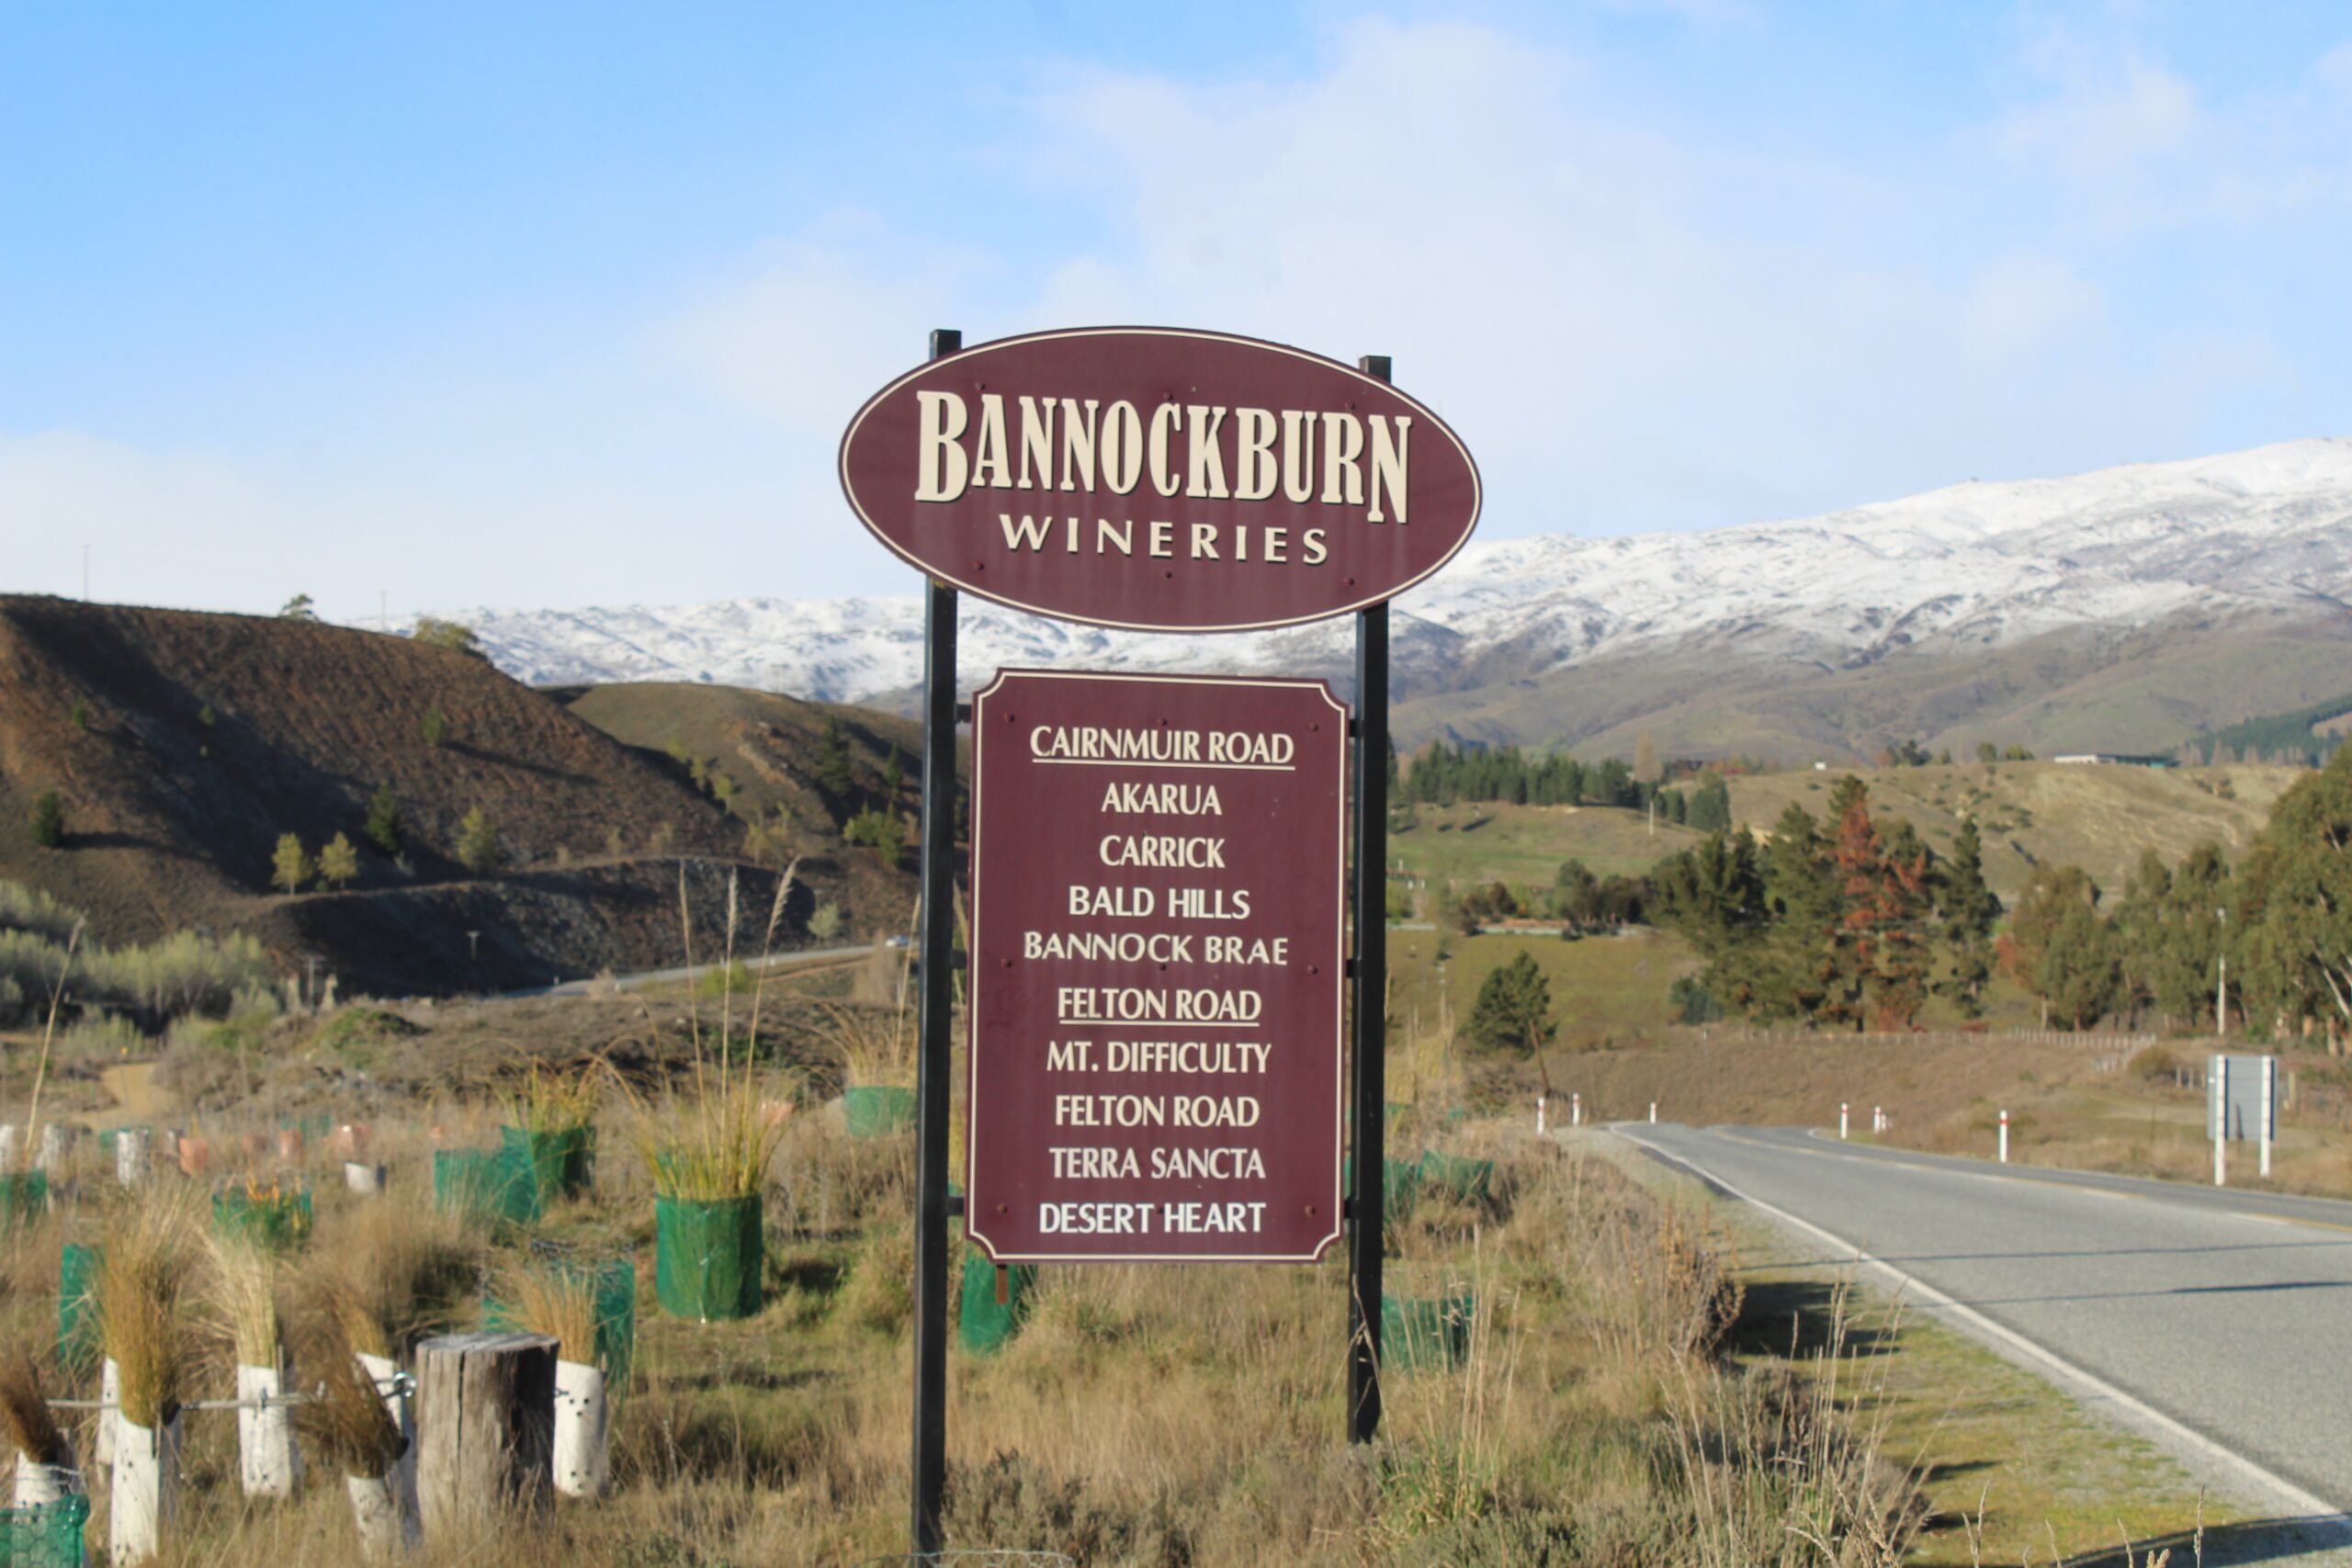 Bannockburn wineries